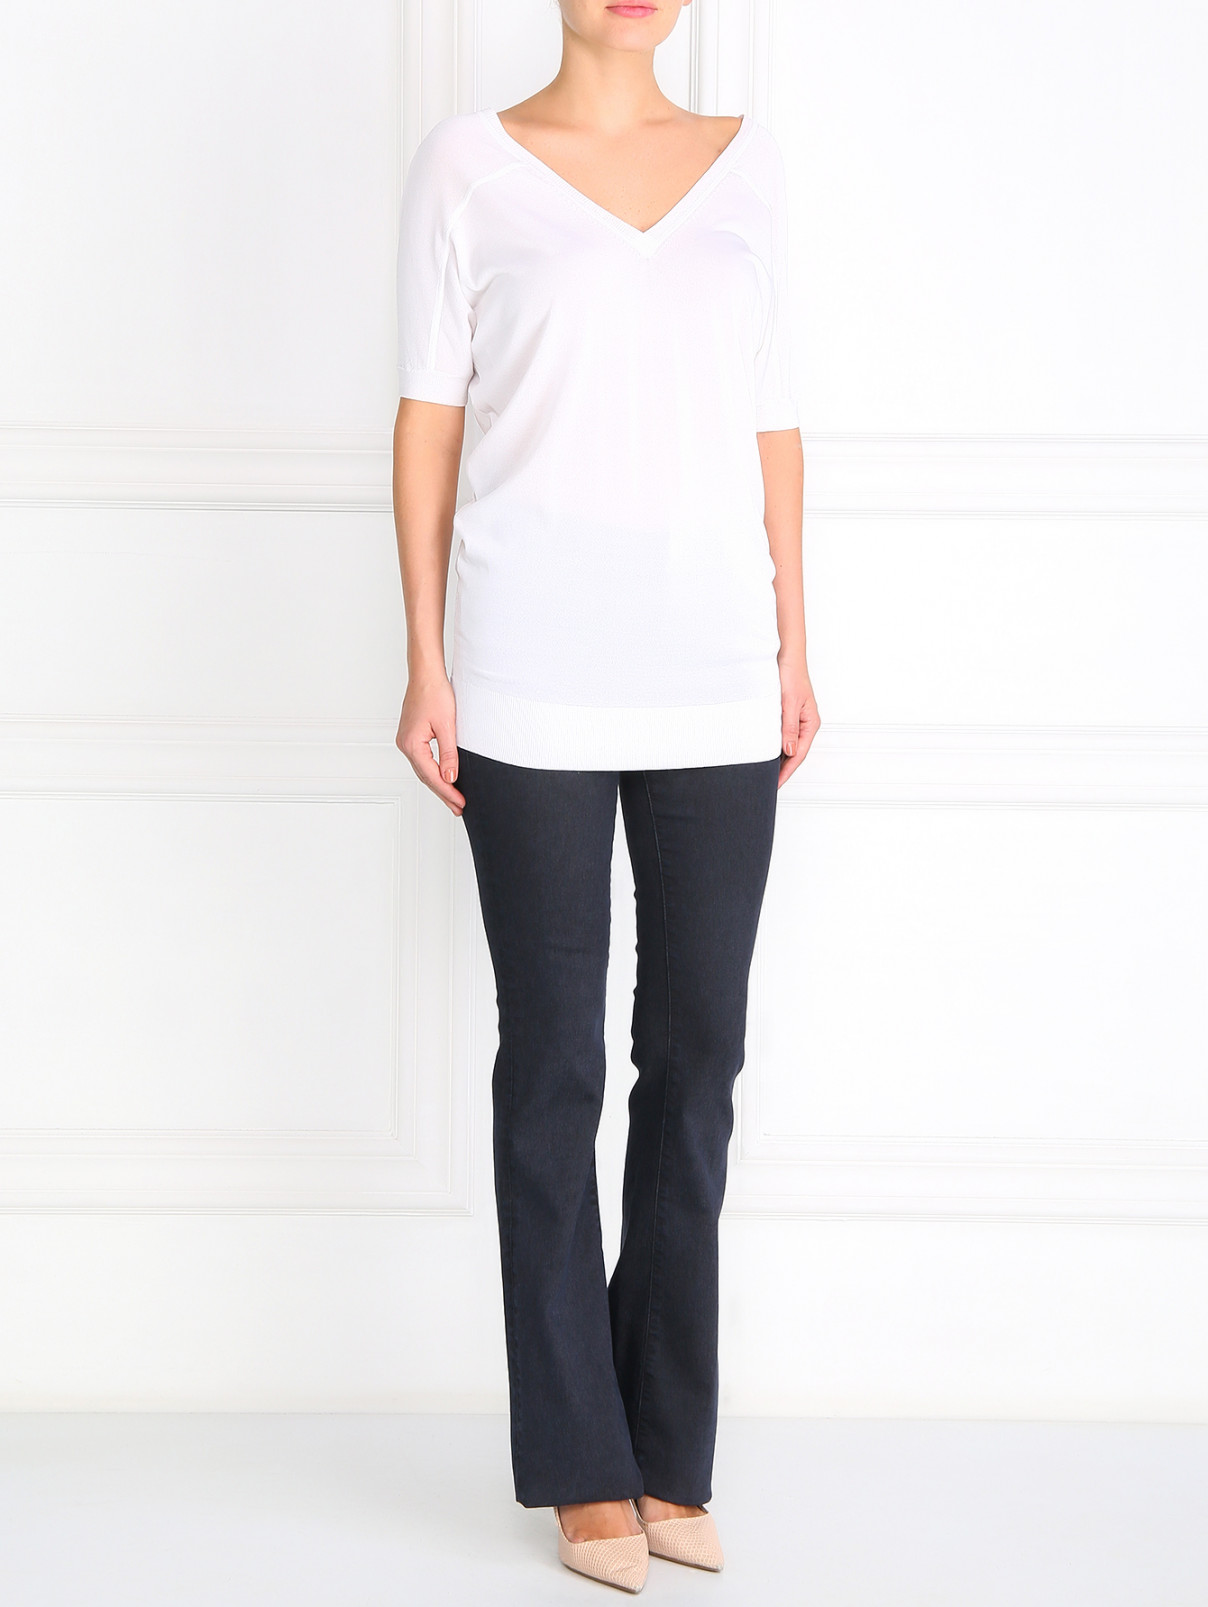 Кардиган из шелка с короткими рукавами Barbara Bui  –  Модель Общий вид  – Цвет:  Белый